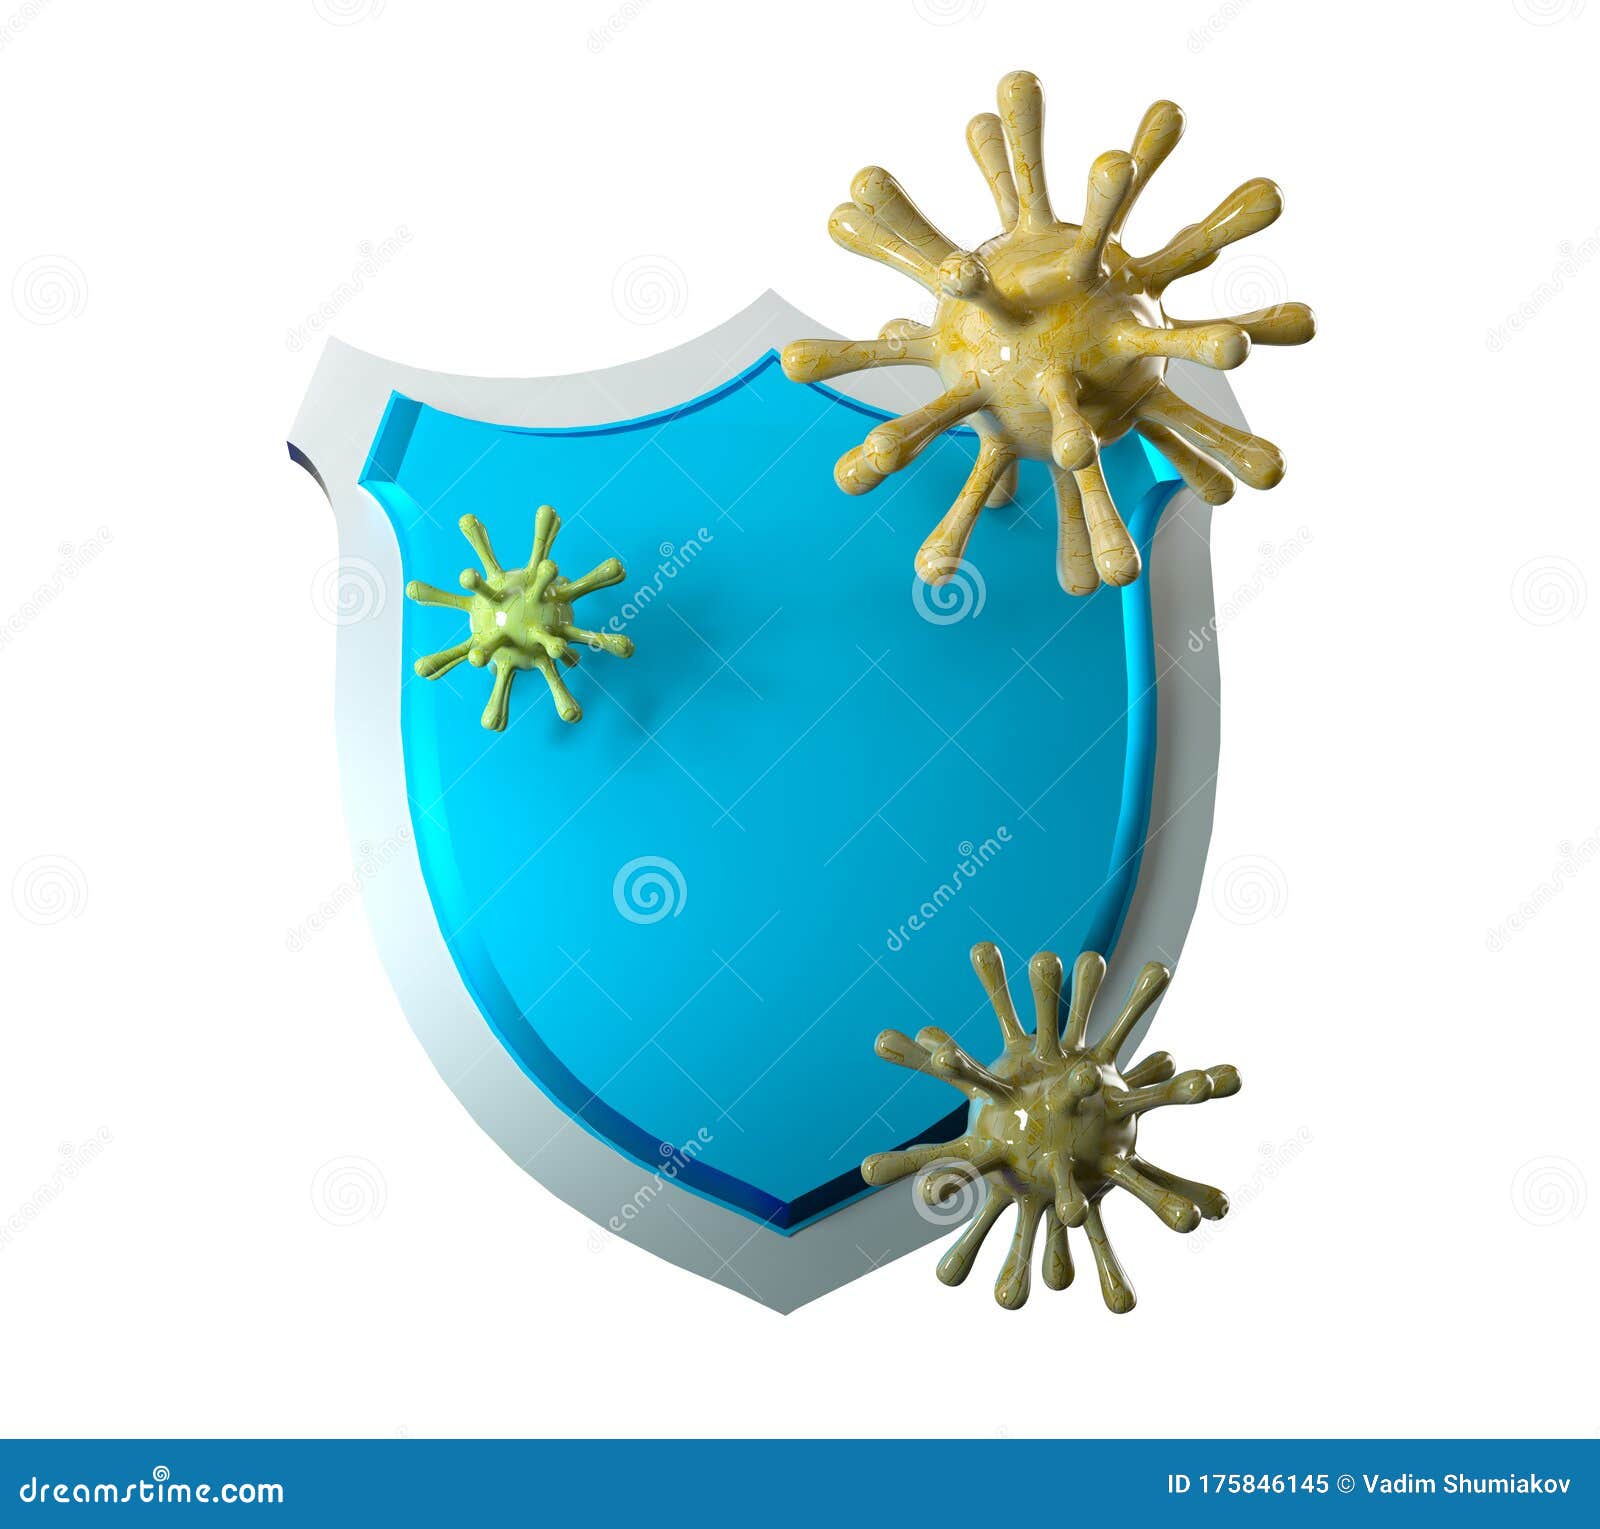 antibacterial or anti virus shield, health protect concept. 3d rendering